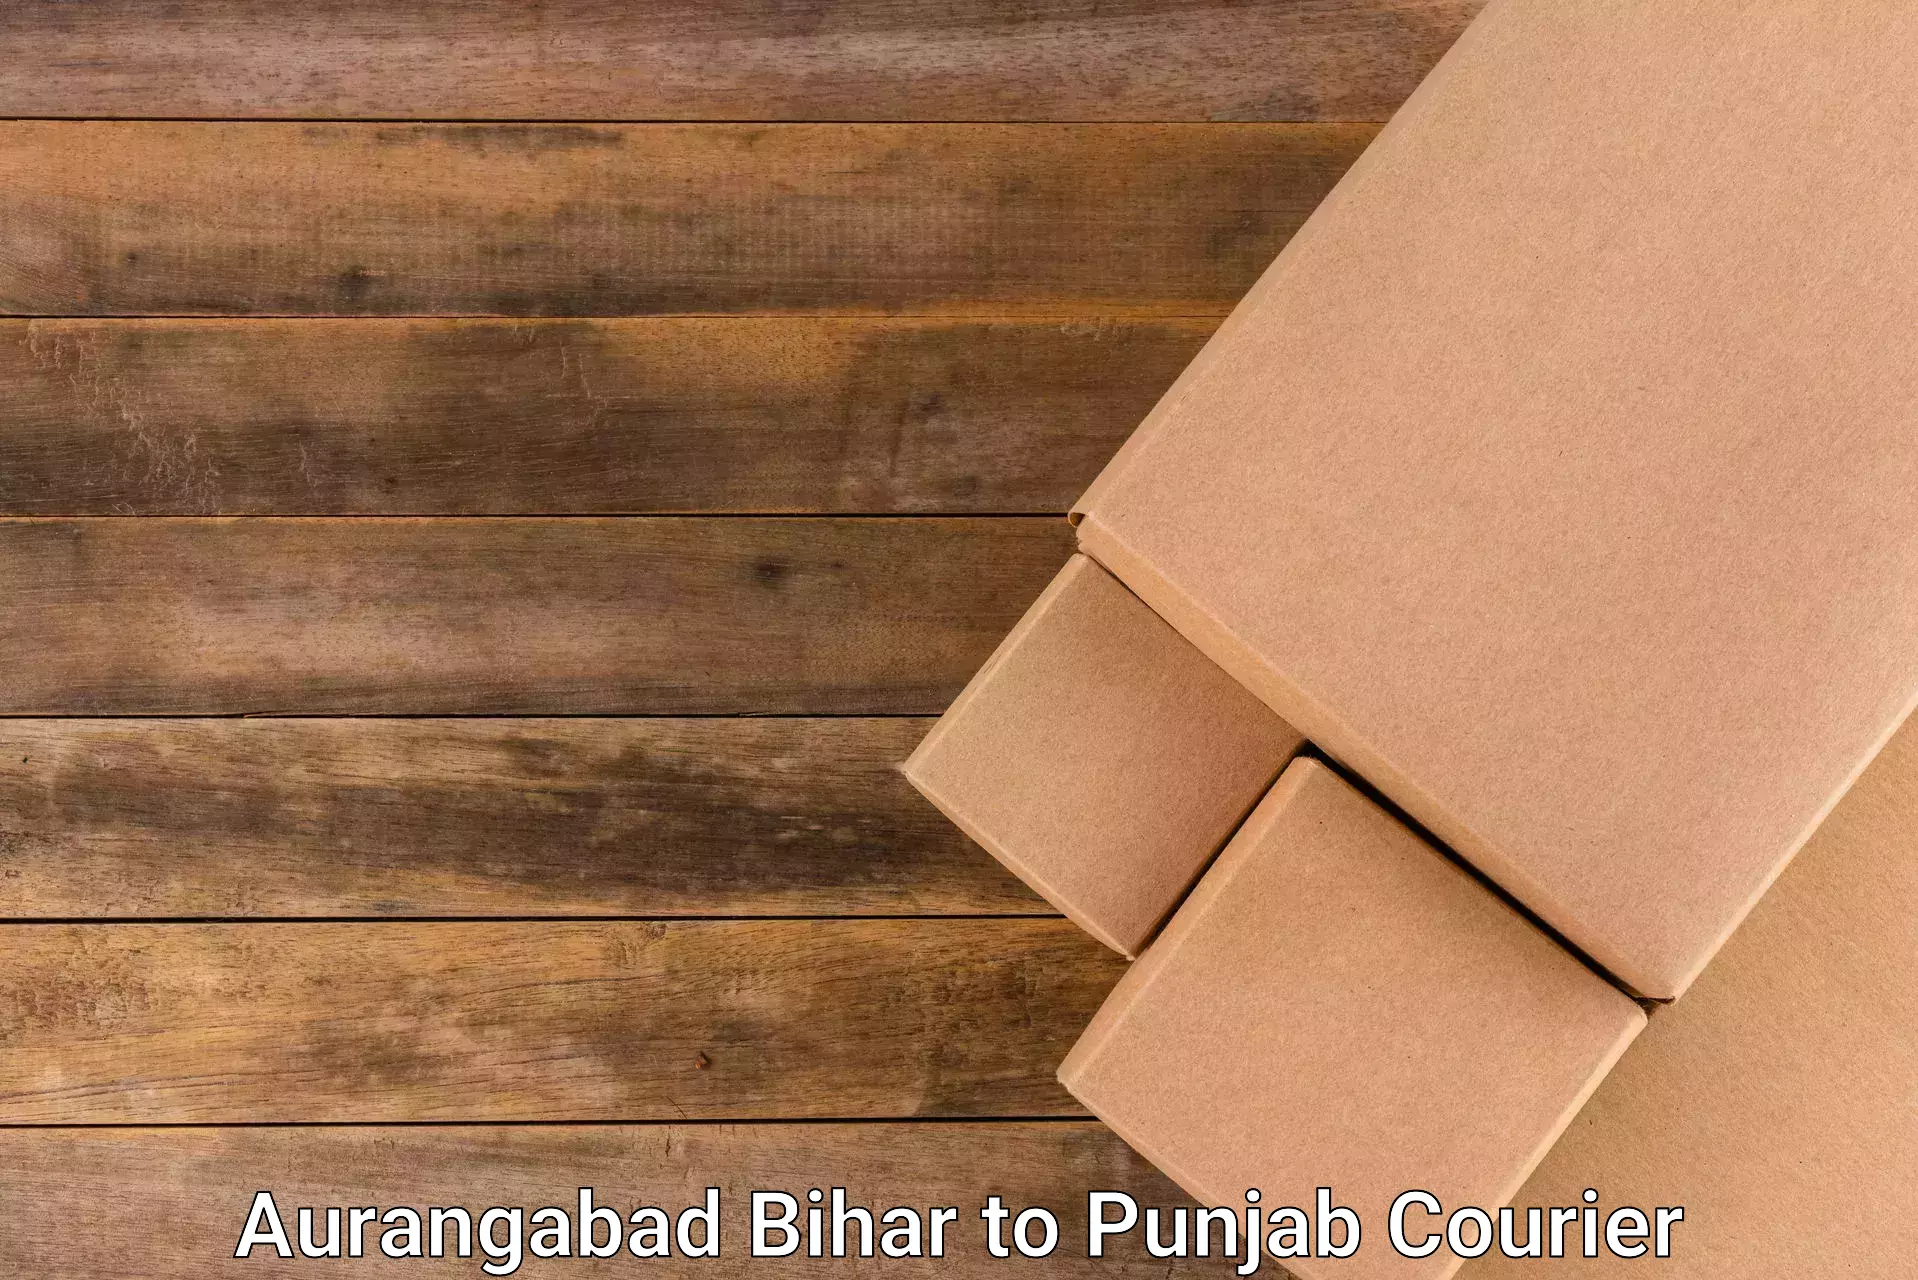 Global courier networks Aurangabad Bihar to Beas